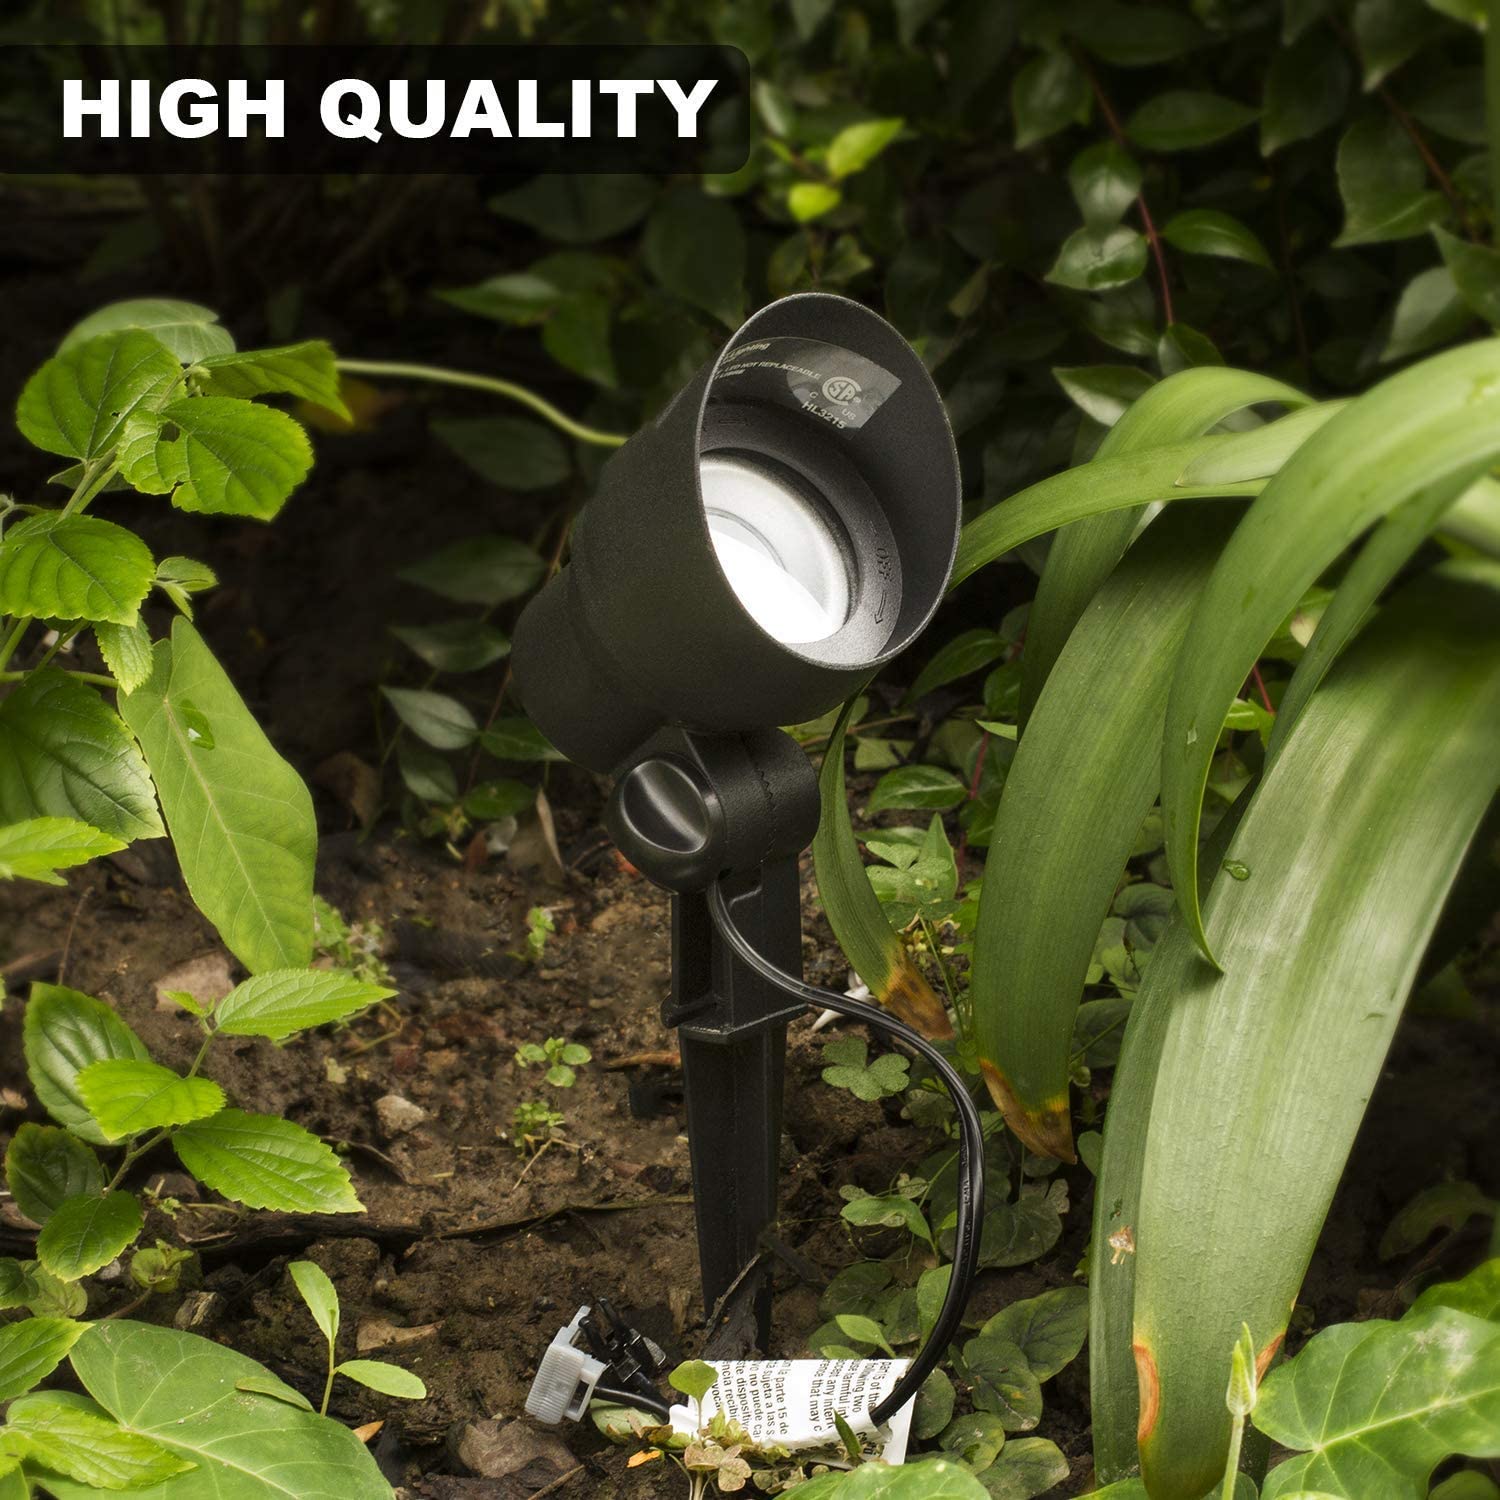 Malibu 6 Watt LED Floodlight Low Voltage for Outdoor Yard Lawn Garden Landscape 2604-01 - image 3 of 6